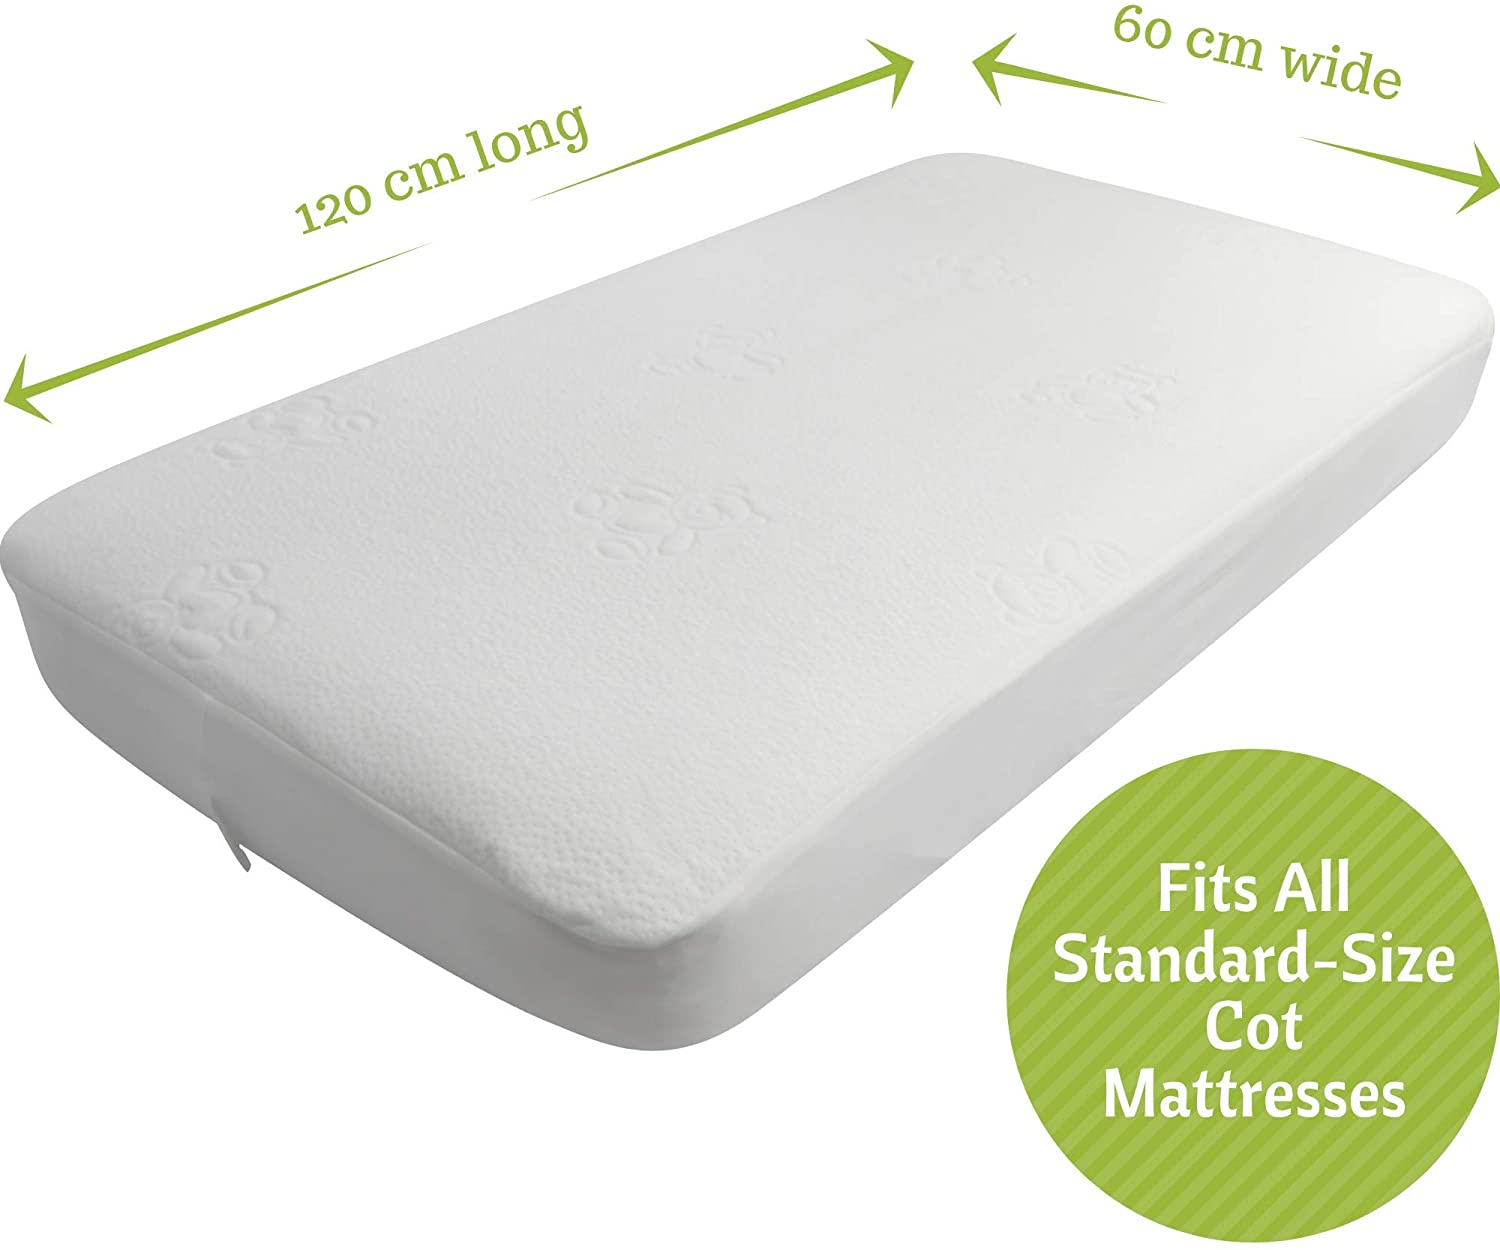 waterproof cot mattress cover 120 x 60